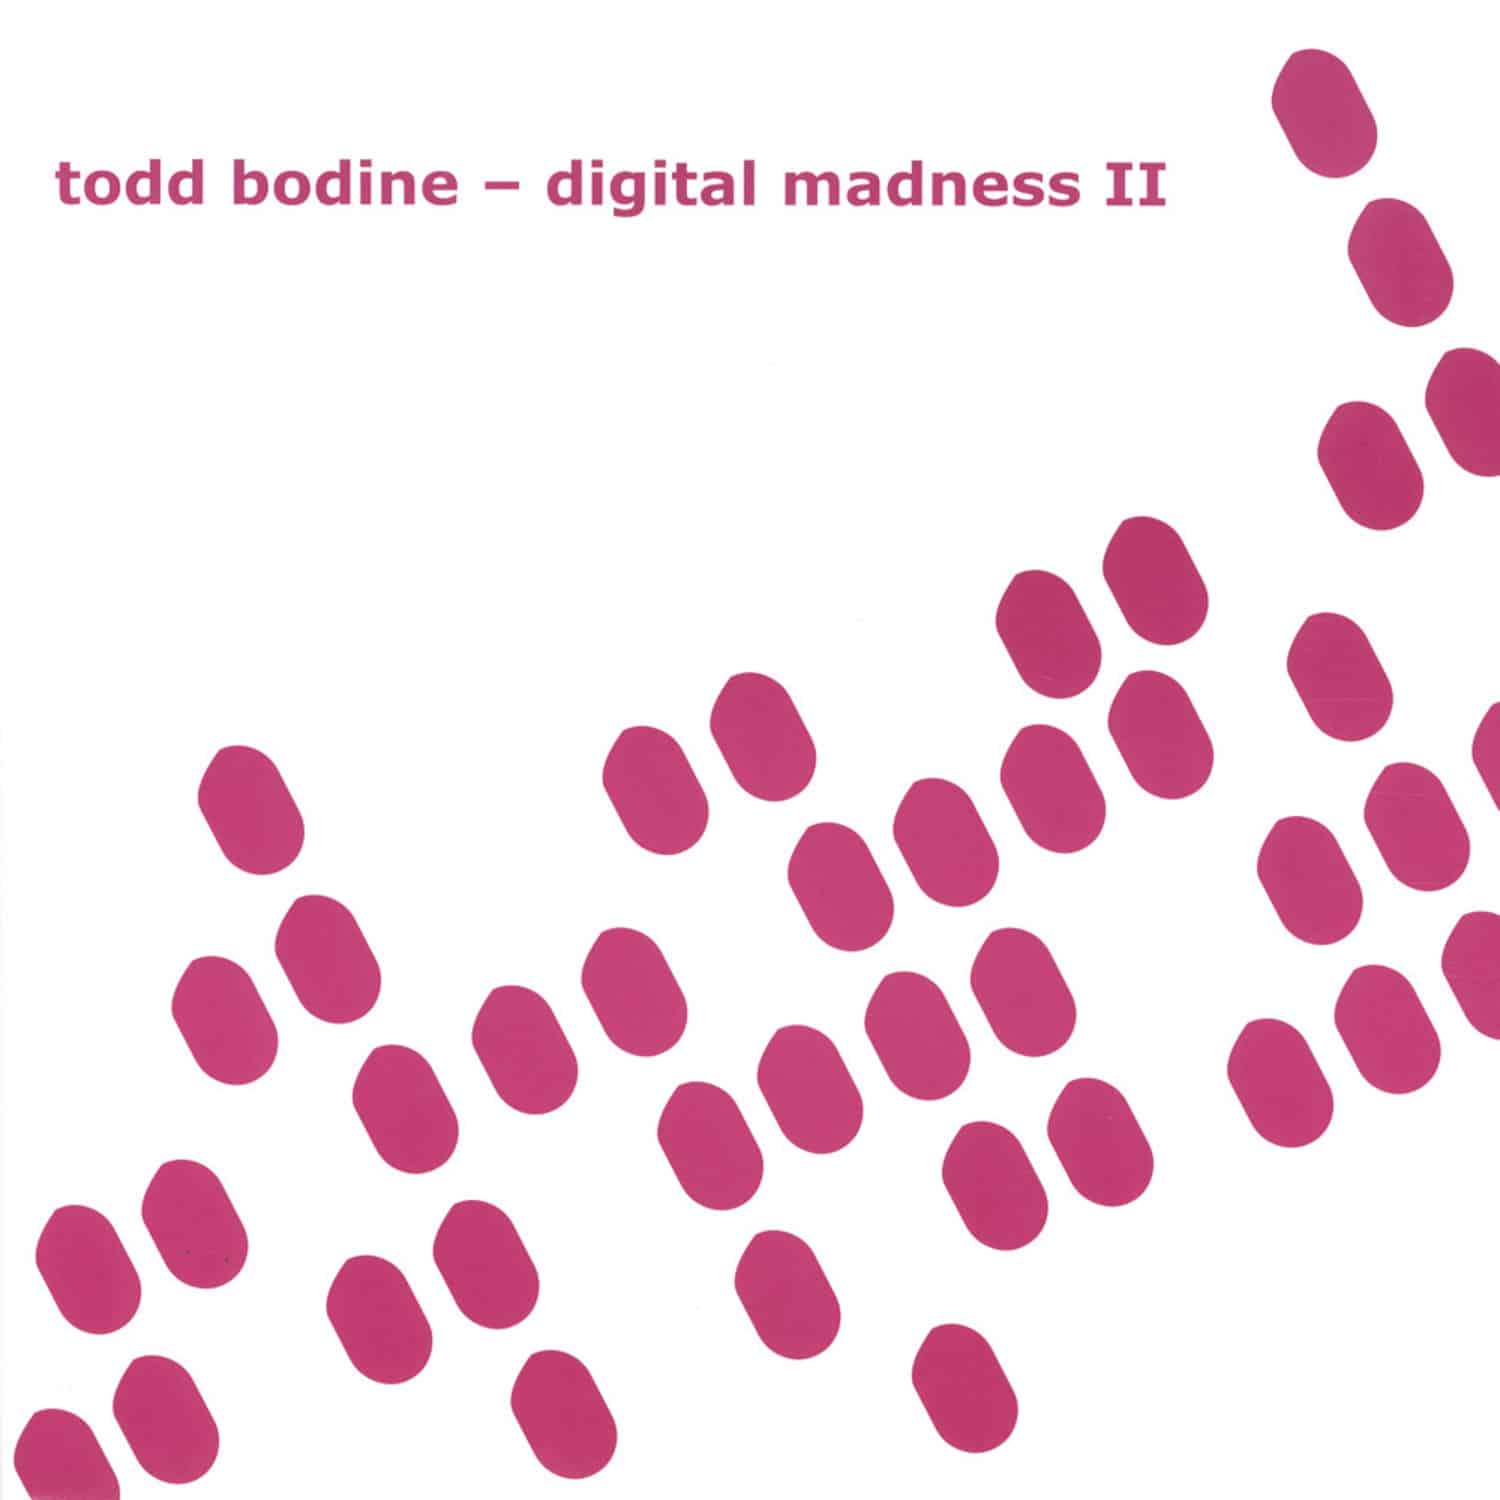 Todd Bodine - DIGITAL MADNESS II